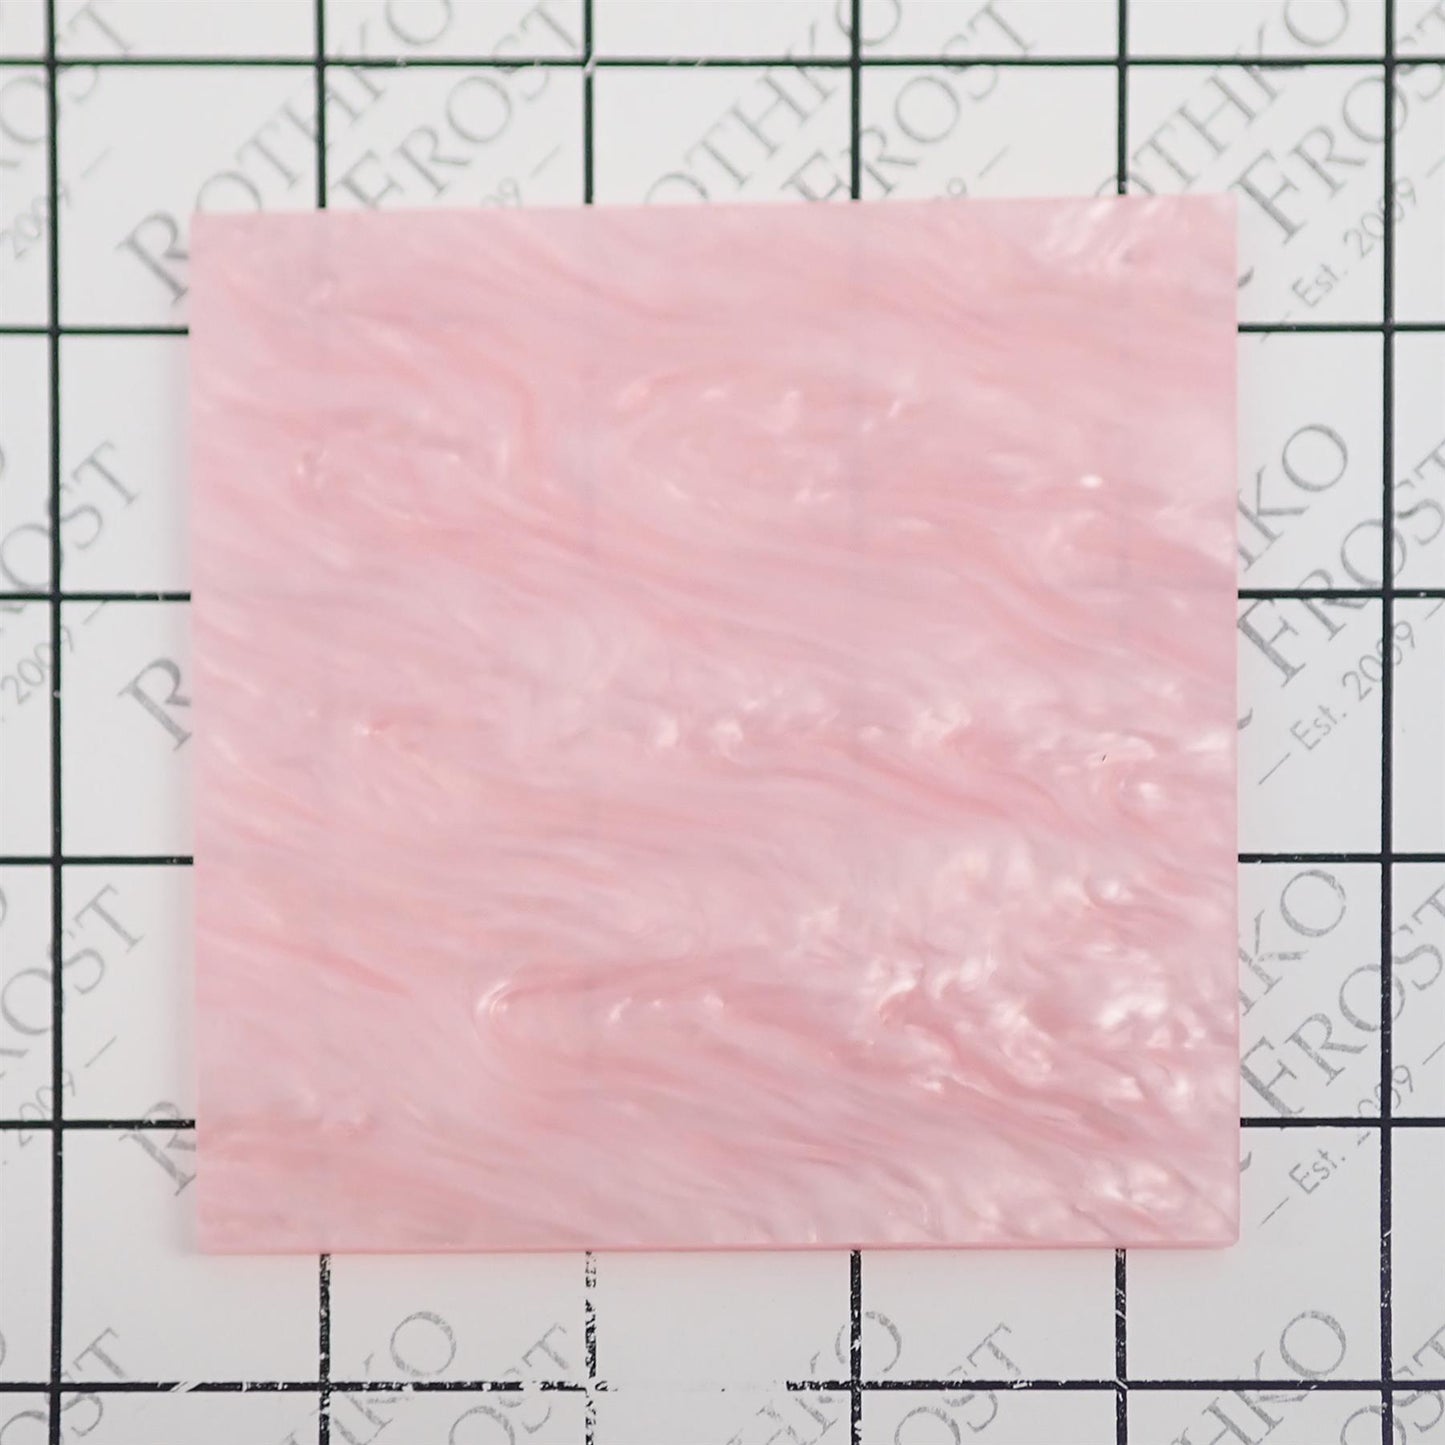 Incudo Baby Pink Pearl Acrylic Sheet - 300x200x3mm (11.8x7.87x0.12")